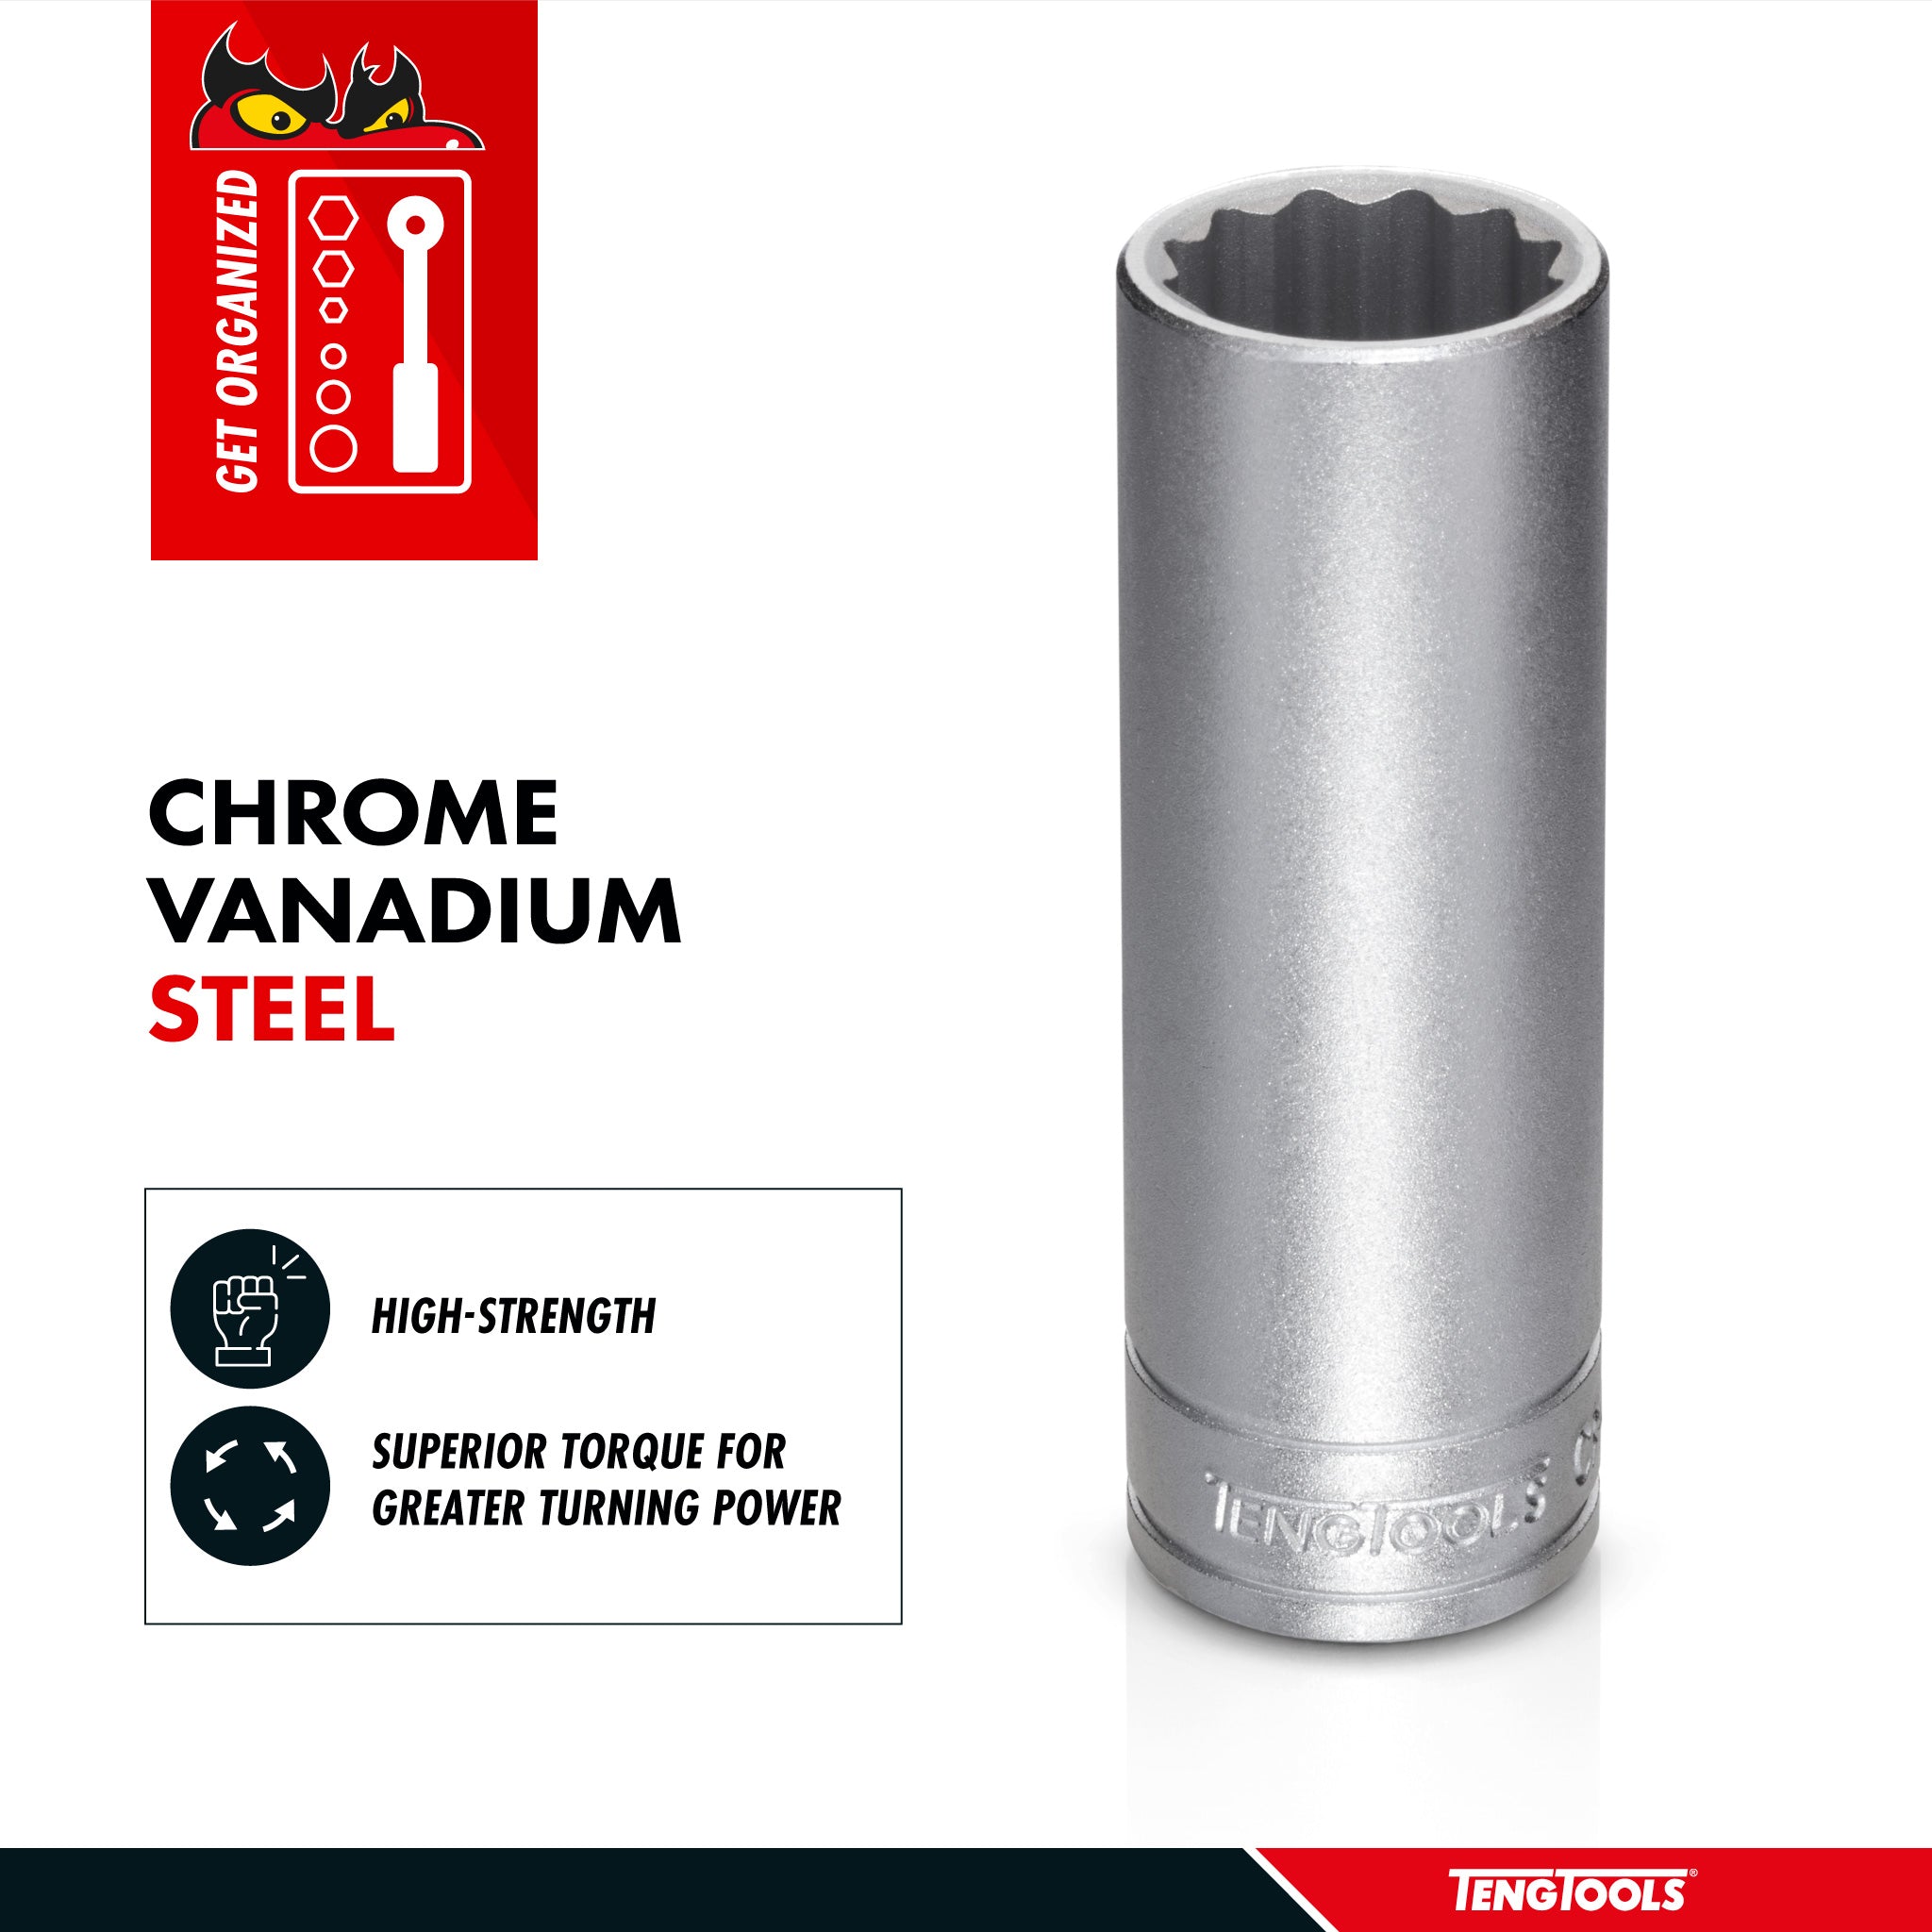 Teng Tools 1/2 Inch Drive 12 Point Metric Deep Chrome Vanadium Sockets - 10mm